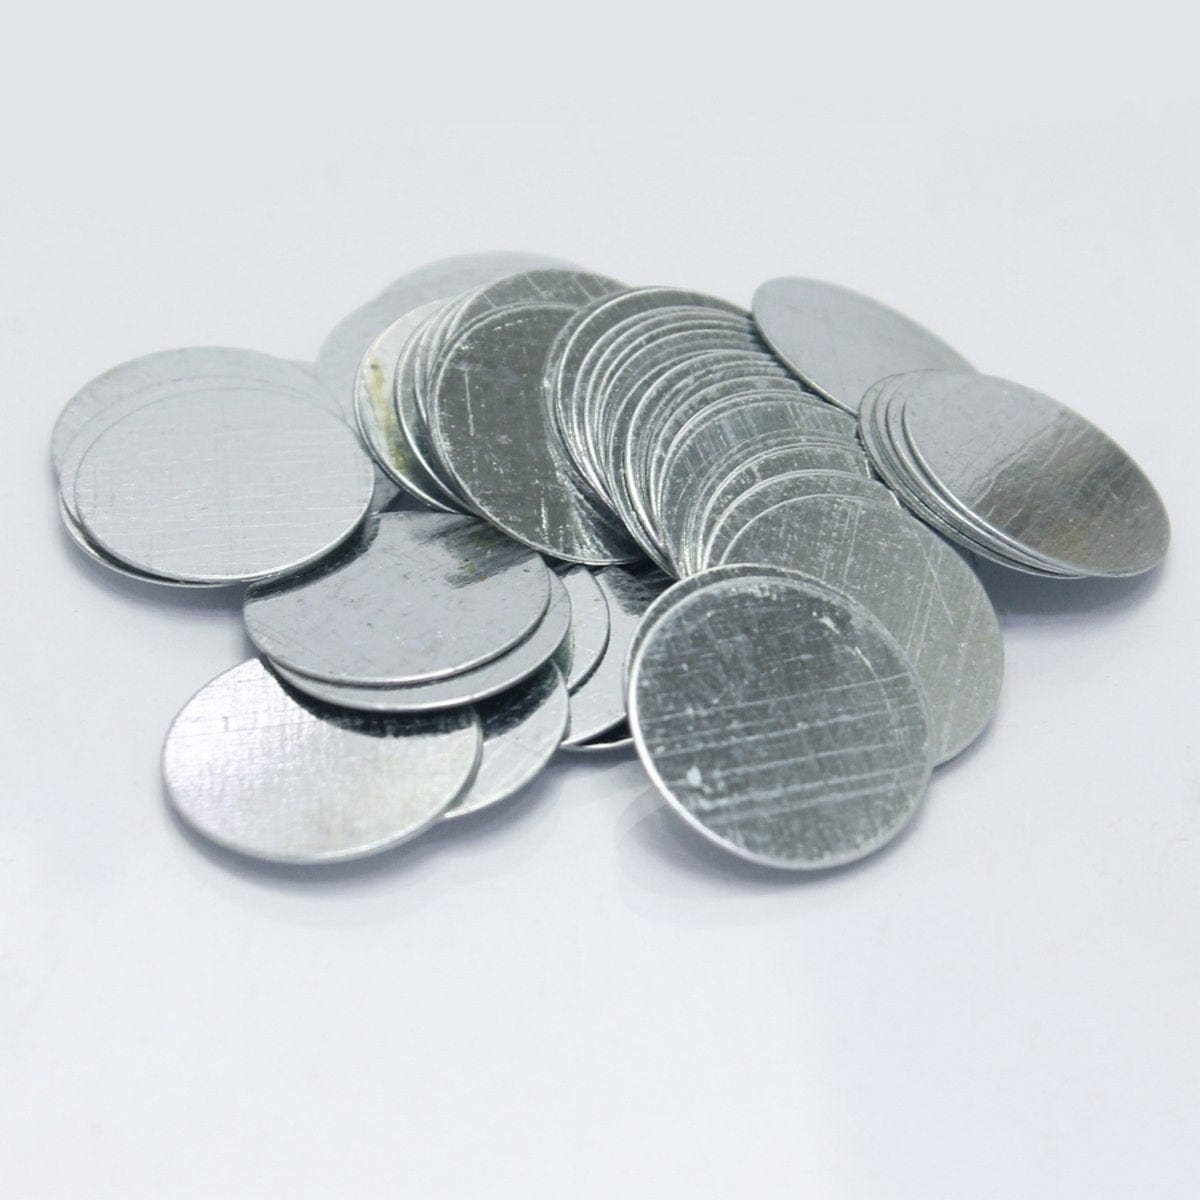 jags-mumbai Magnet Sheet & Buttons Coin For Magnetic Meduim